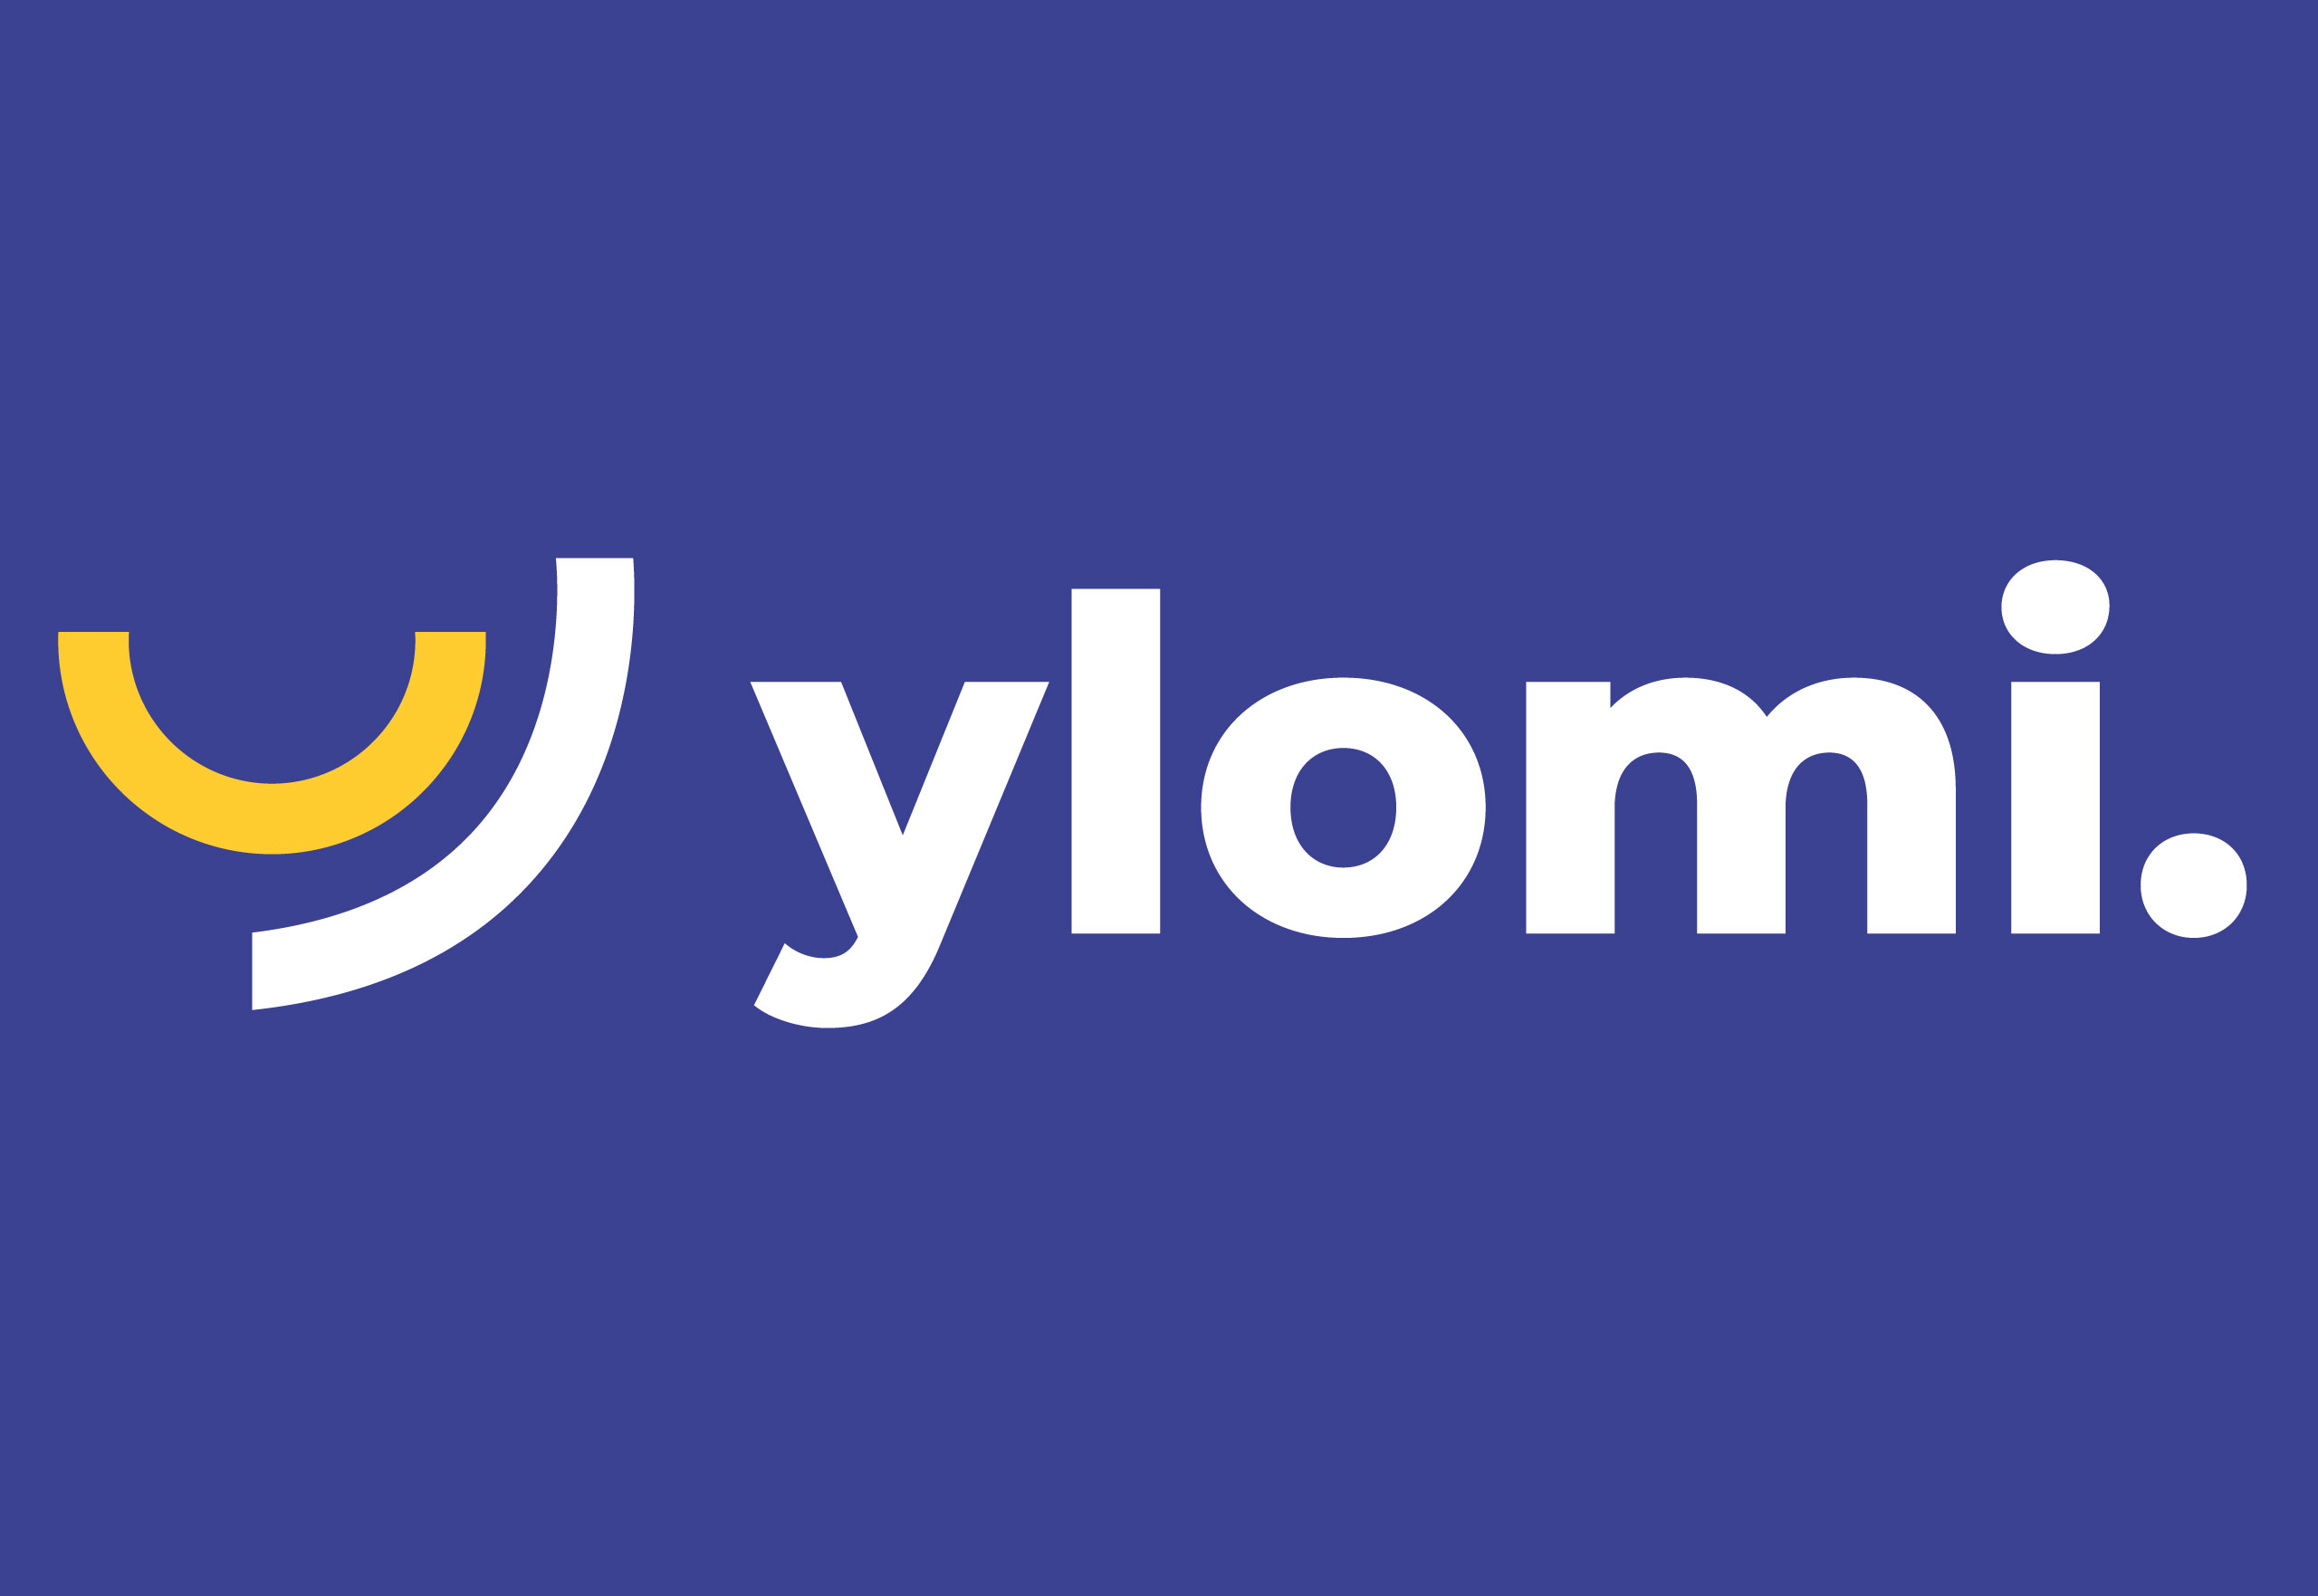 logo ylomi